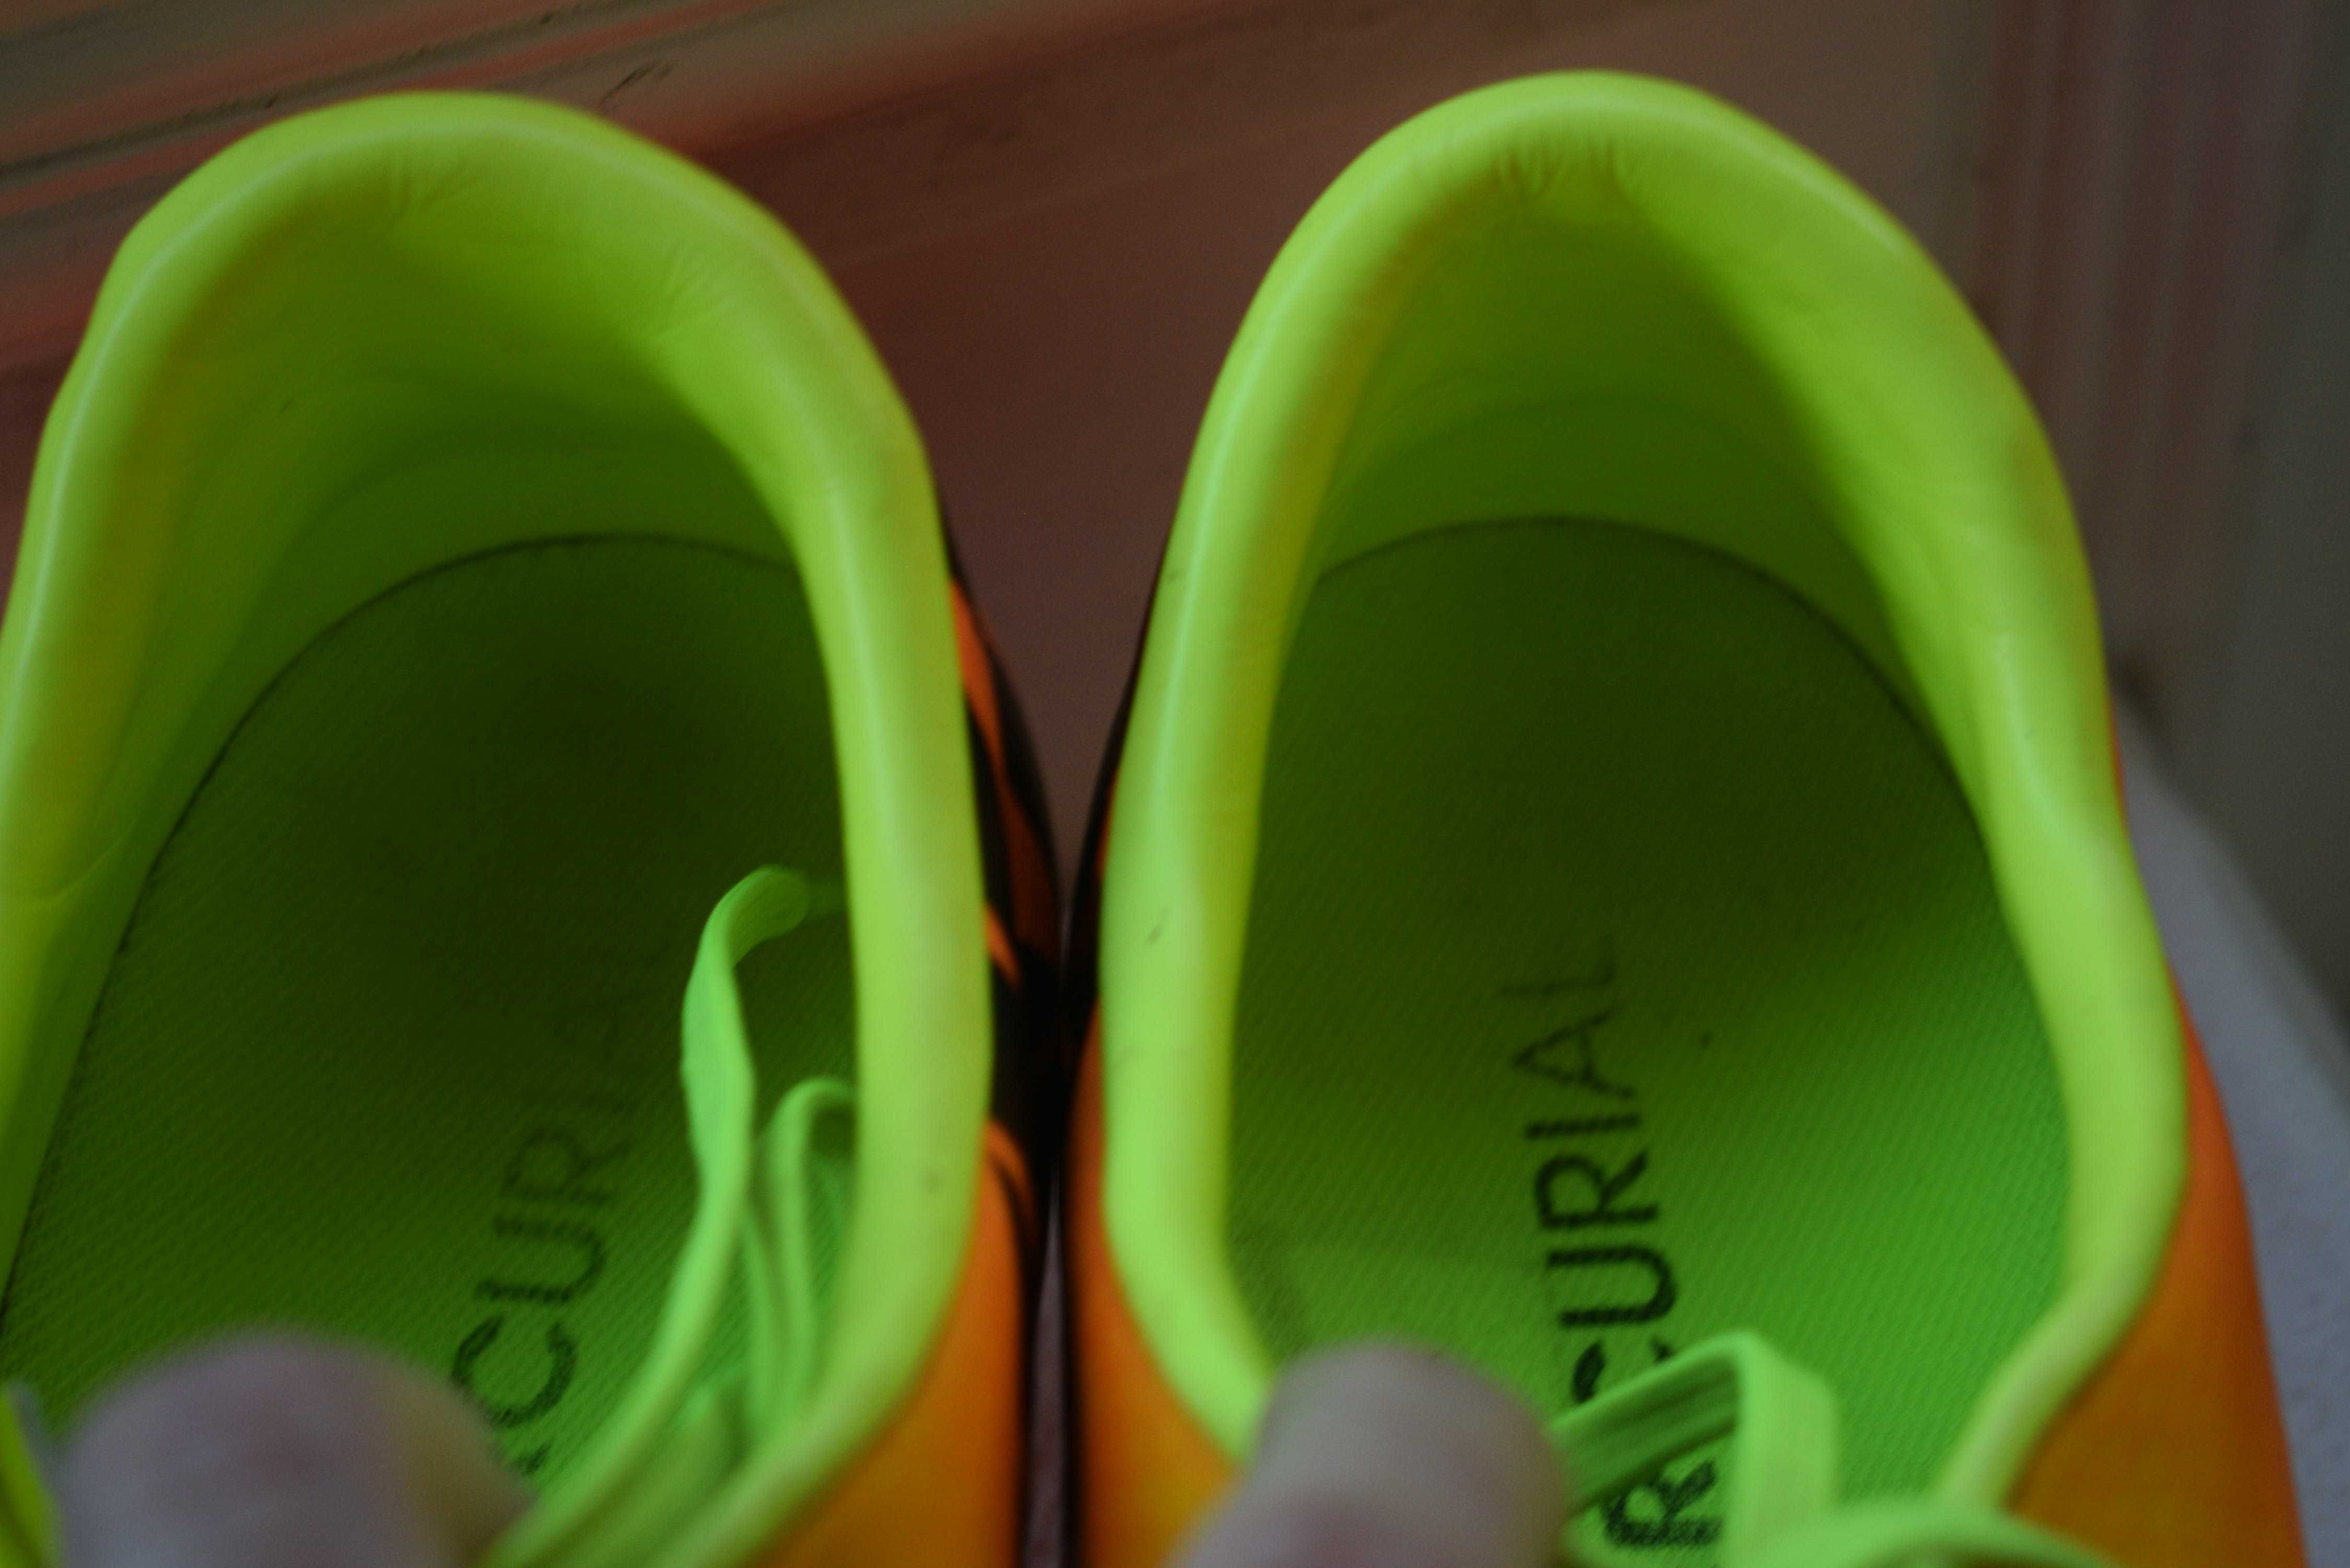 копочки копки бутсы кроссовки кросовки Nike Mercurial р. 47,5 31 см